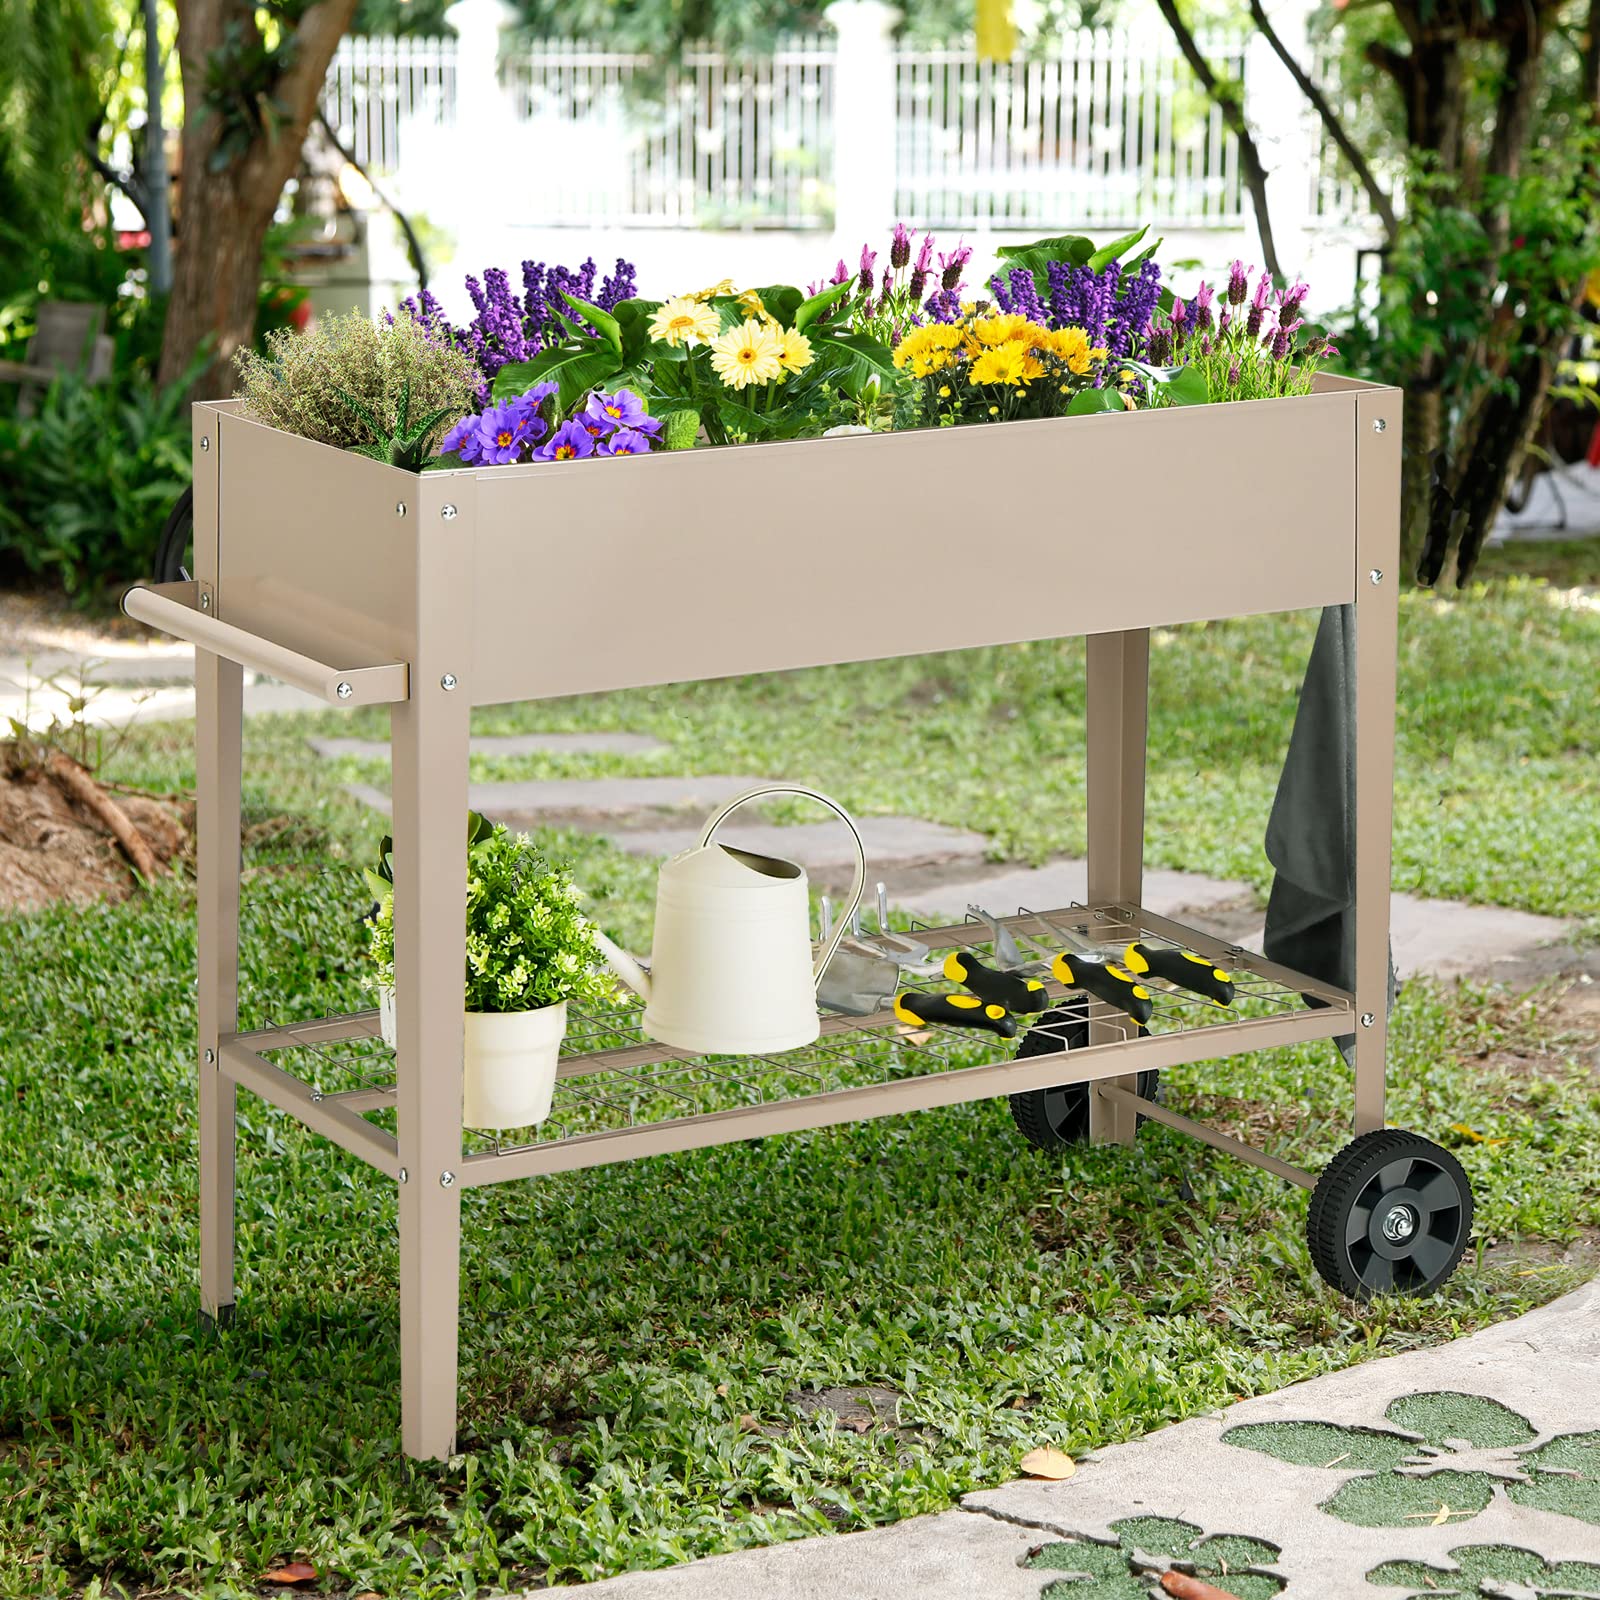 Giantex Raised Garden Bed with Legs, Metal Planter Box with Wheels, Storage Shelf (Light Brown)